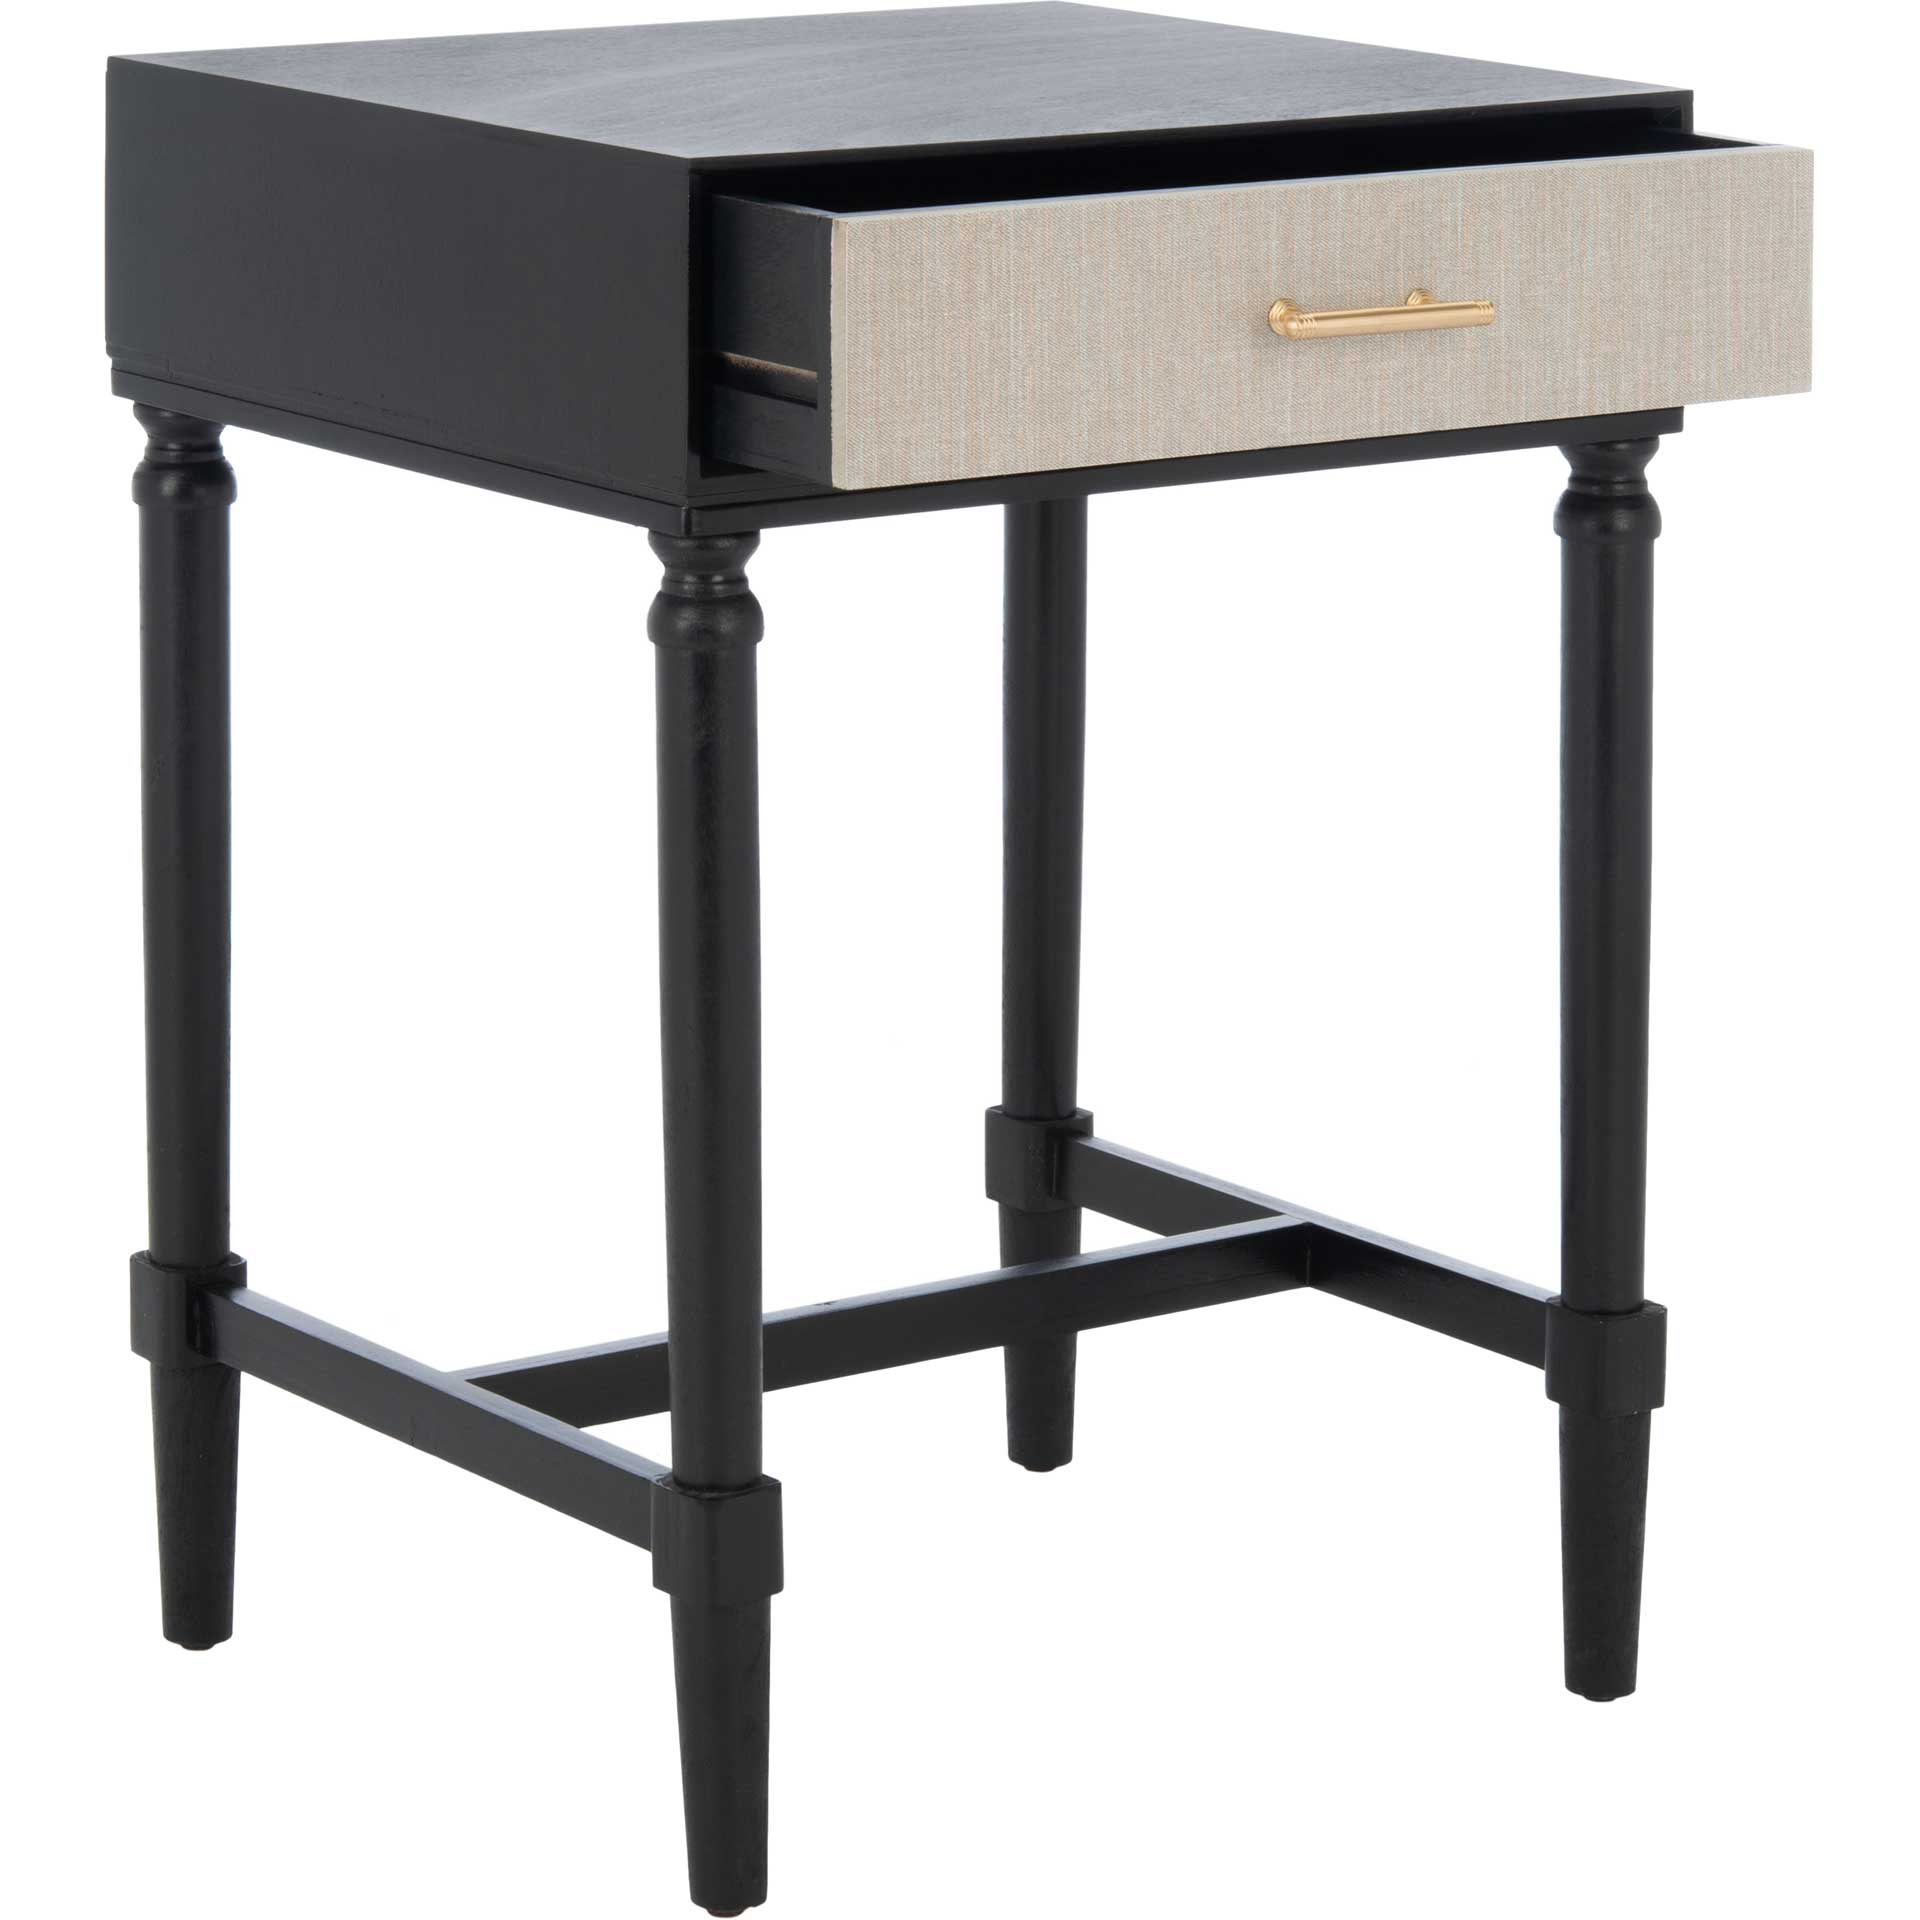 Esposito 1 Drawer Accent Table Black